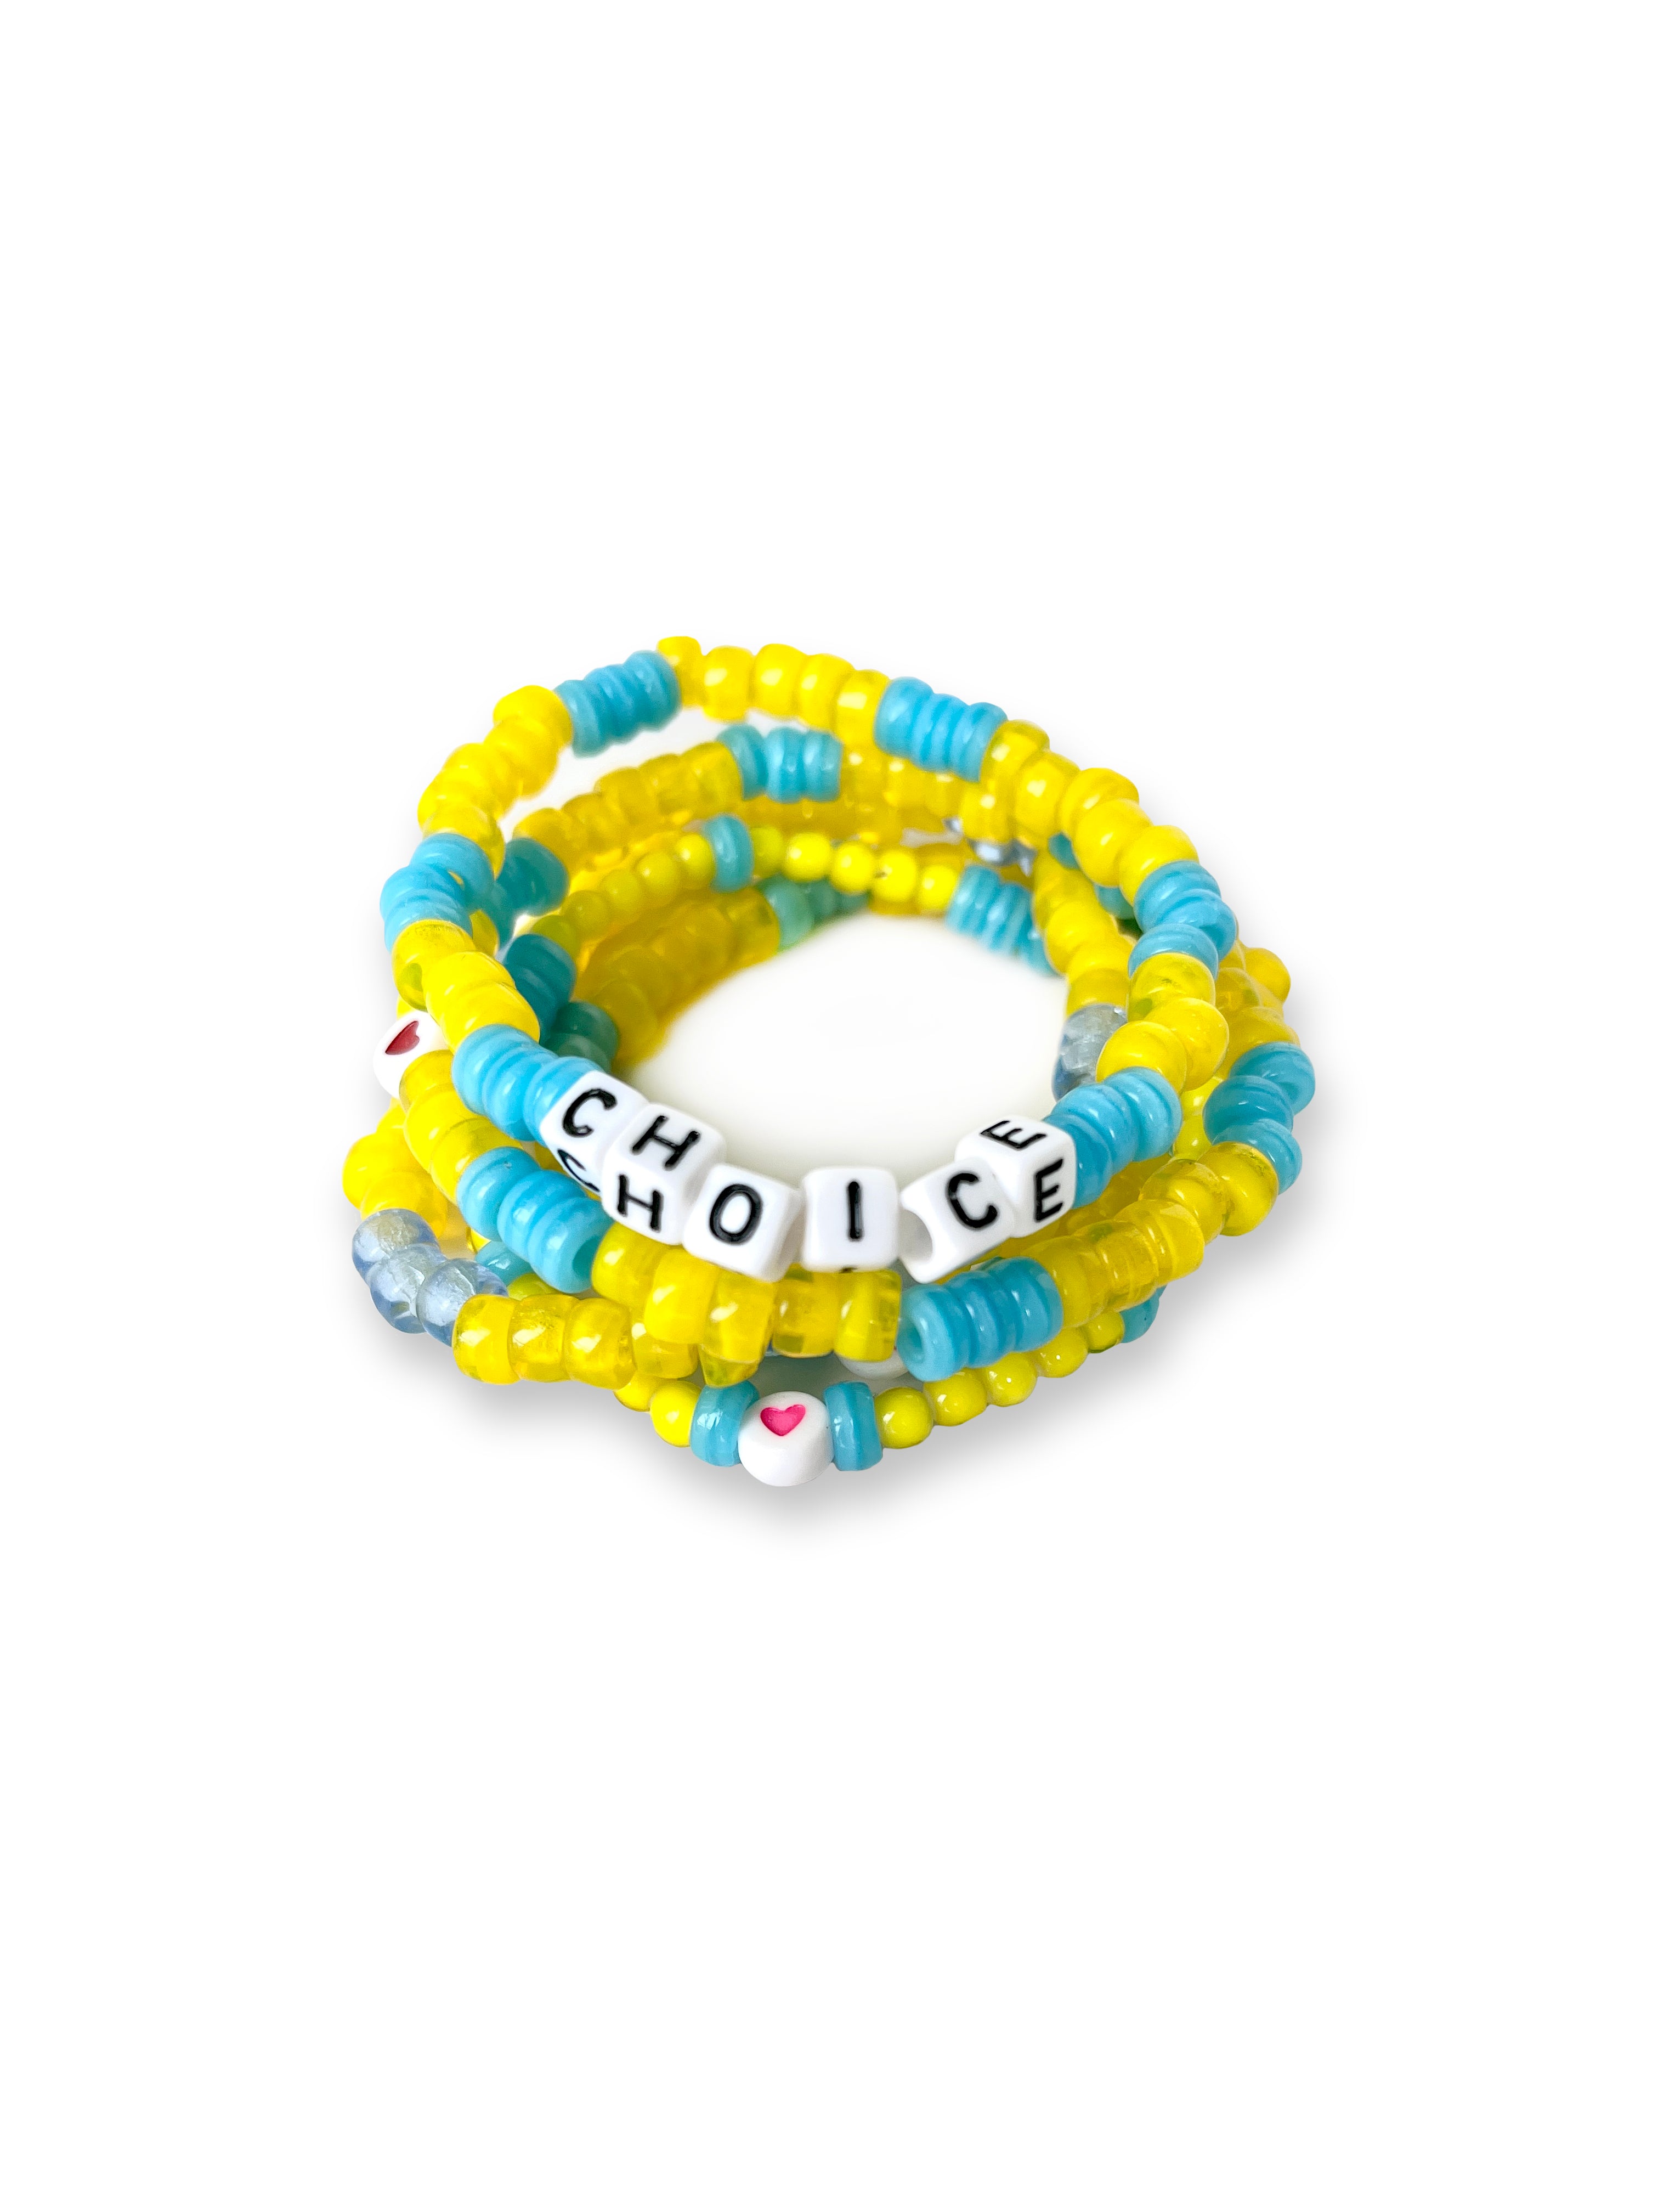 Choix Bracelet Lifesaver 